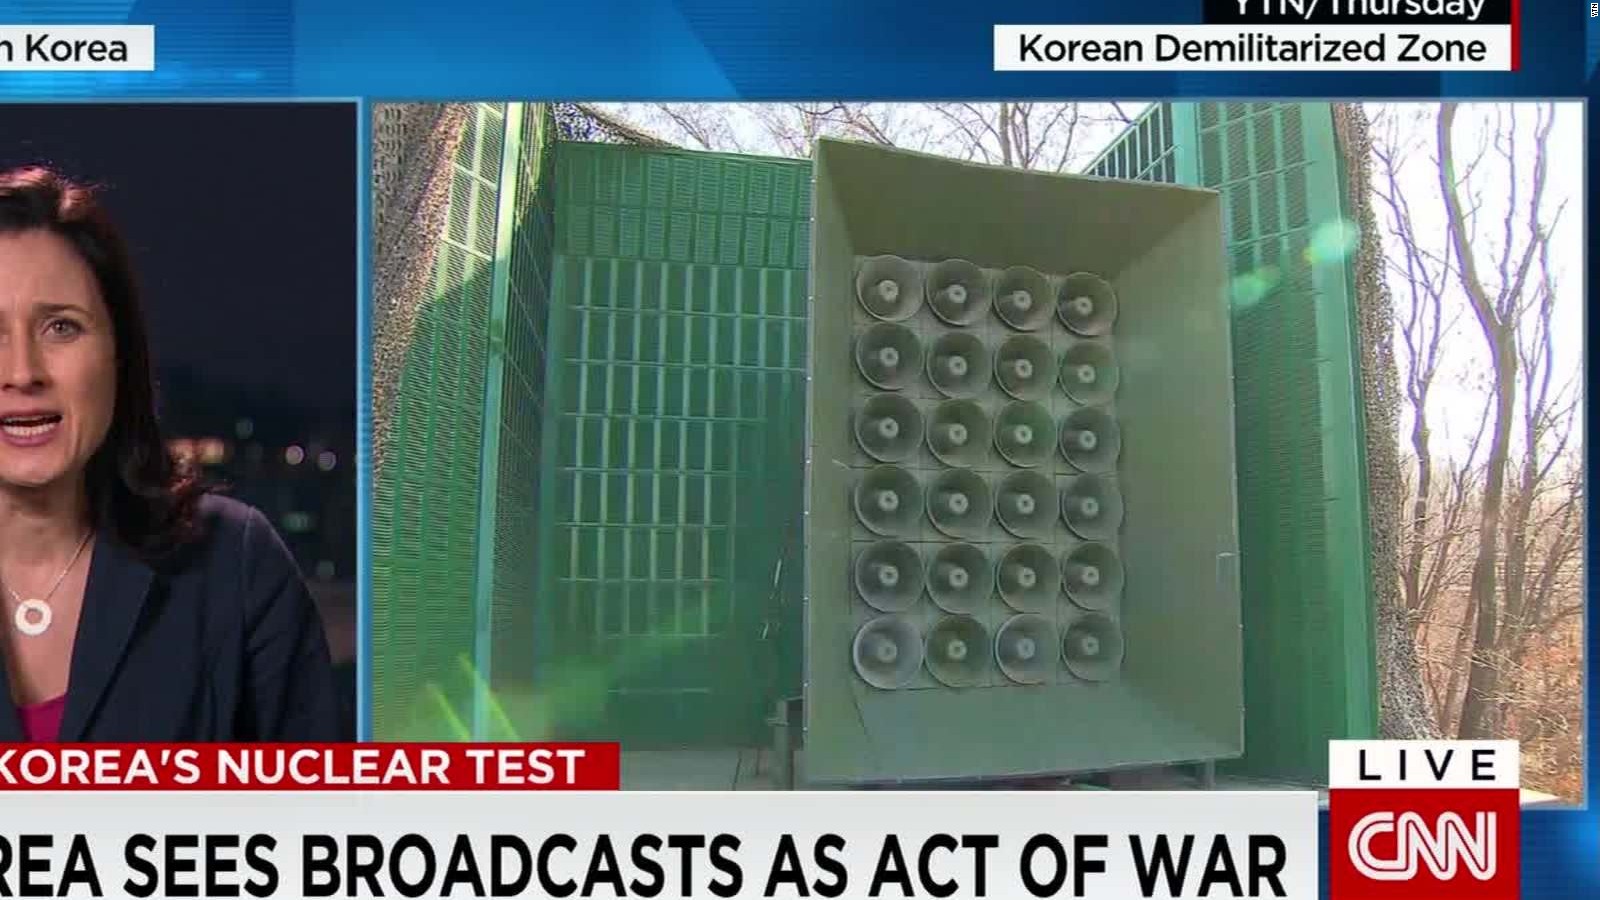 South Korea Blasts North With K Pop Propaganda After Nuclear Test Cnn